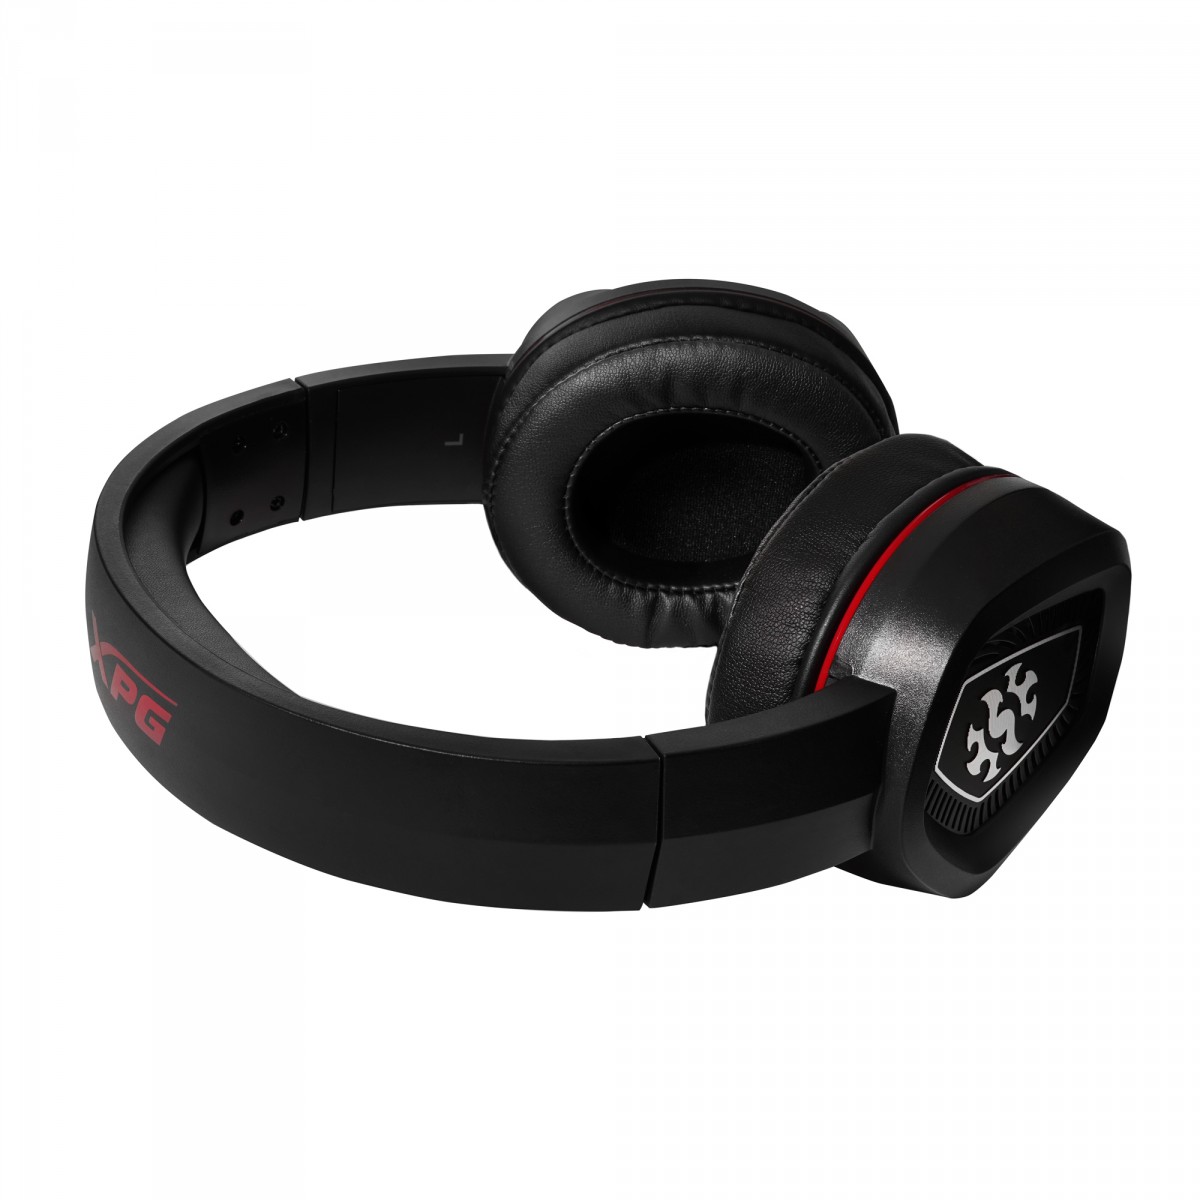 Headset Gamer XPG, Emix H20, 7.1 Virtual Surround, RGB, USB, Black/Red, 75260008